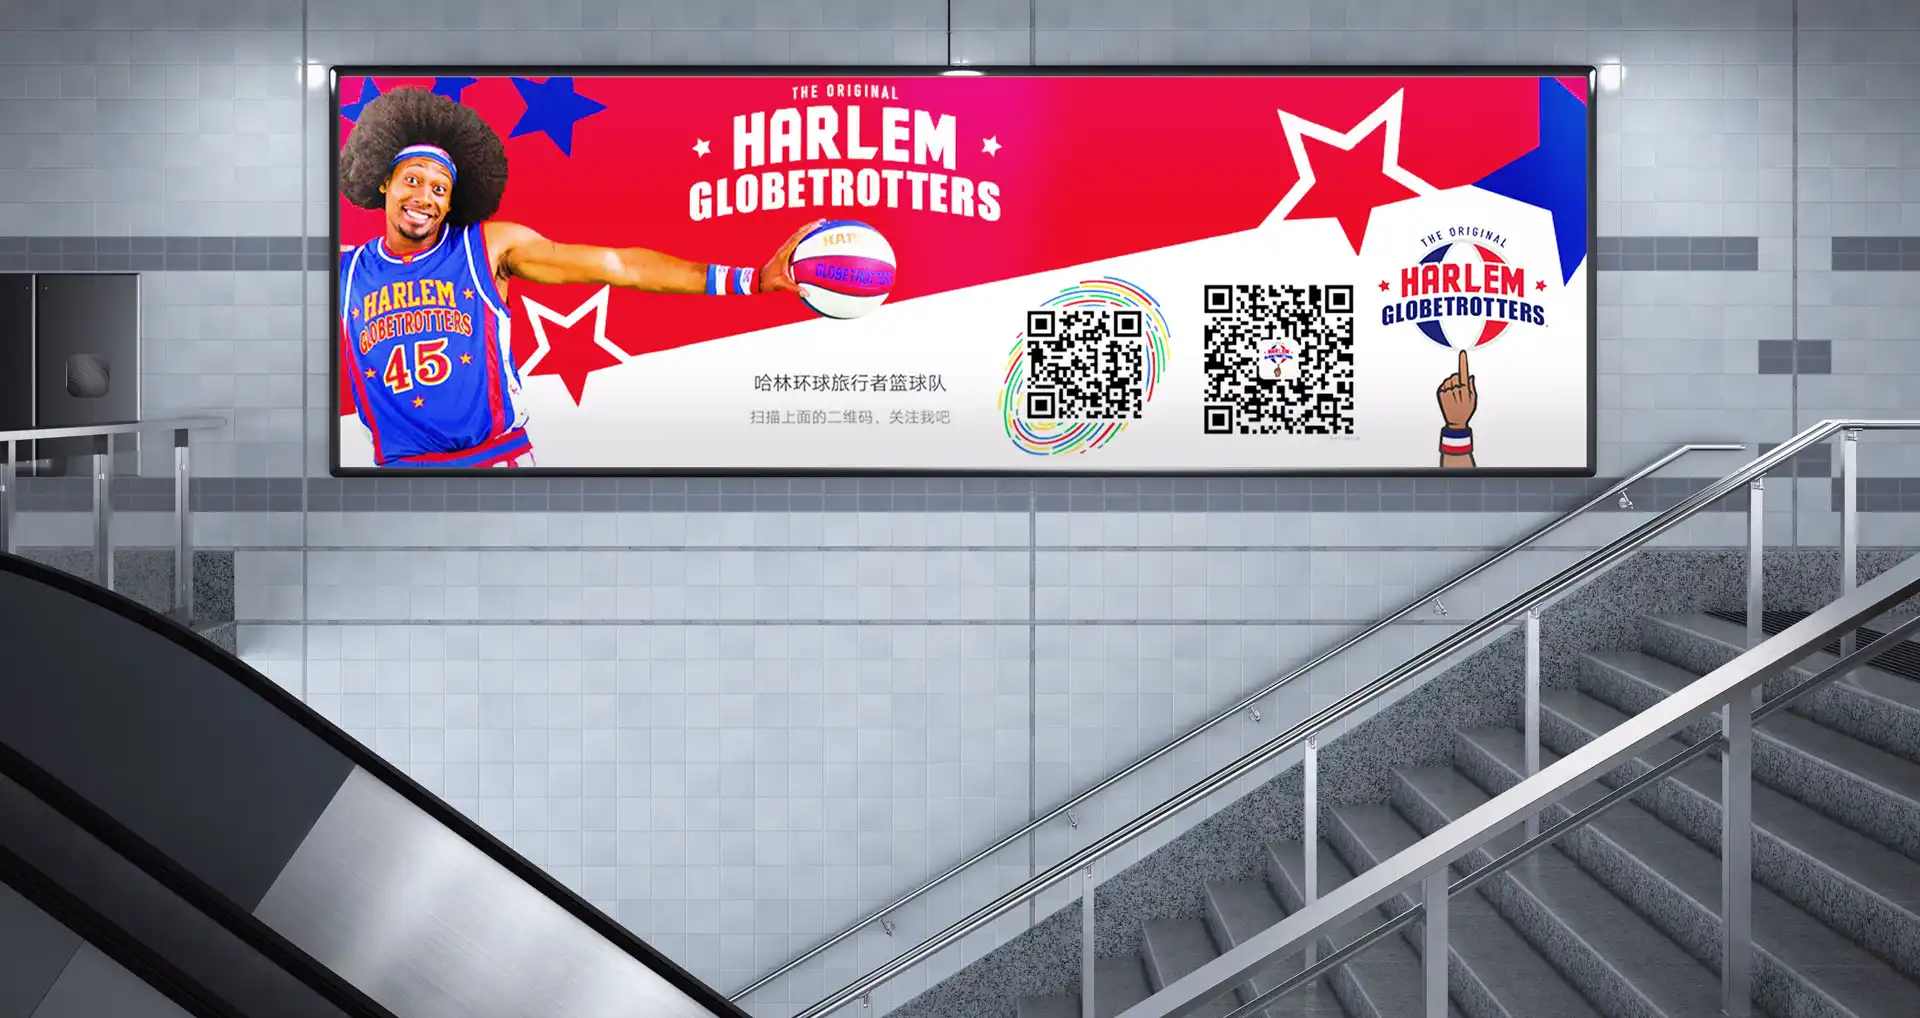 Harlem-Globetrotters-sign in subway